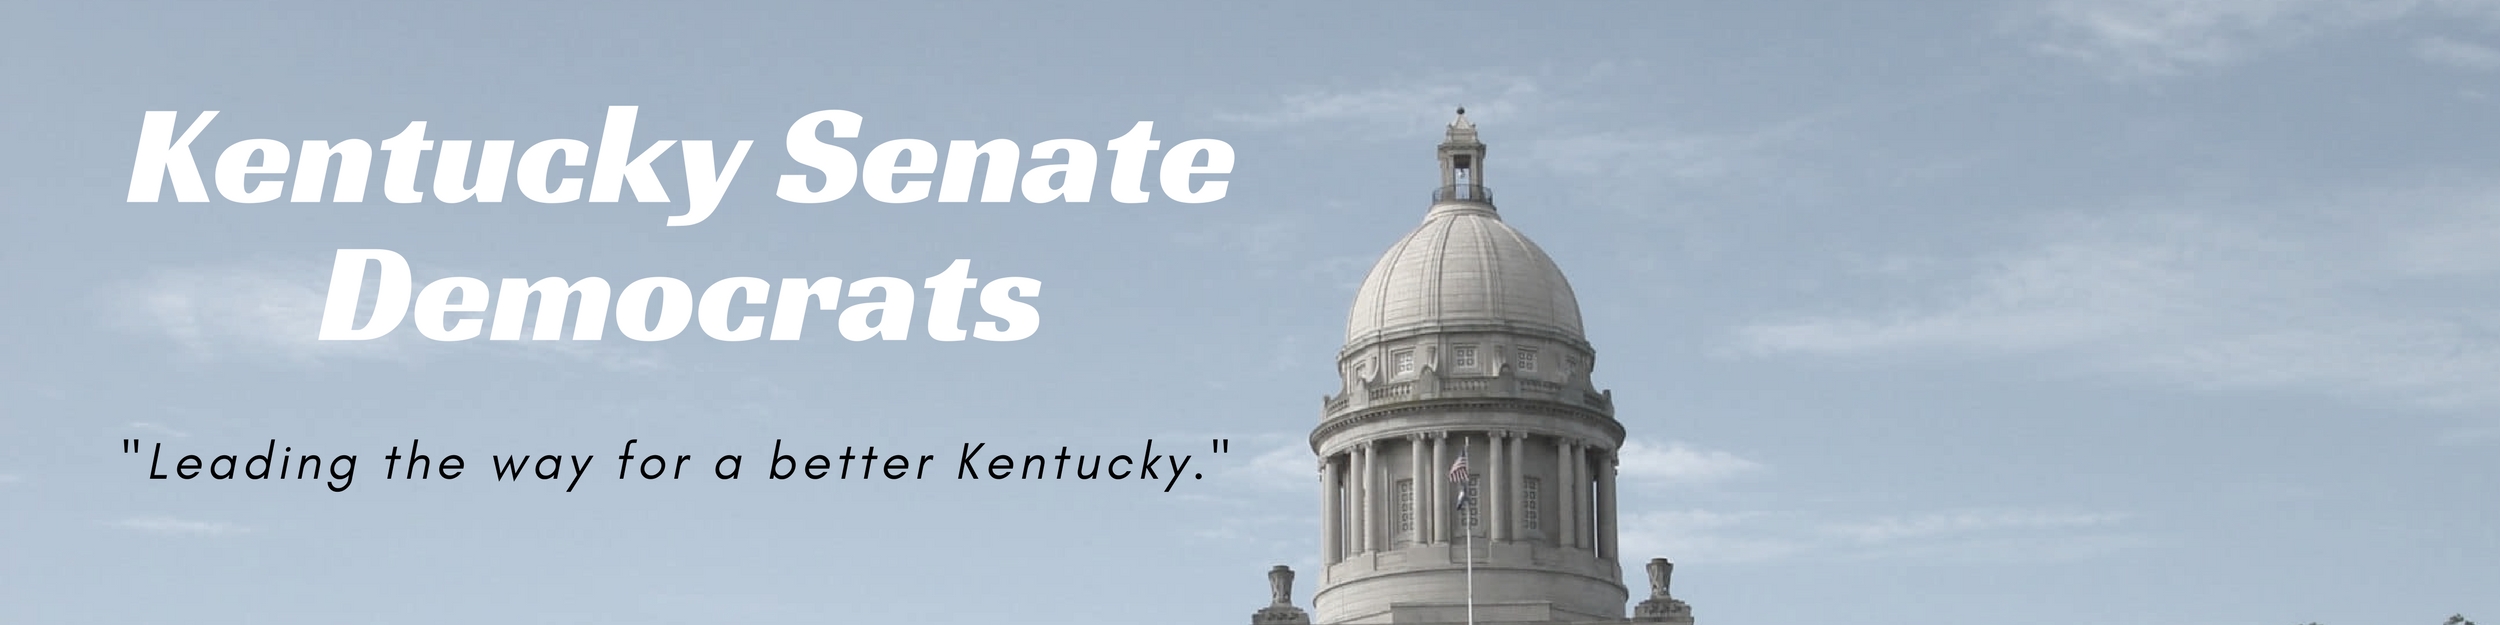 Kentucky Senate Democrats